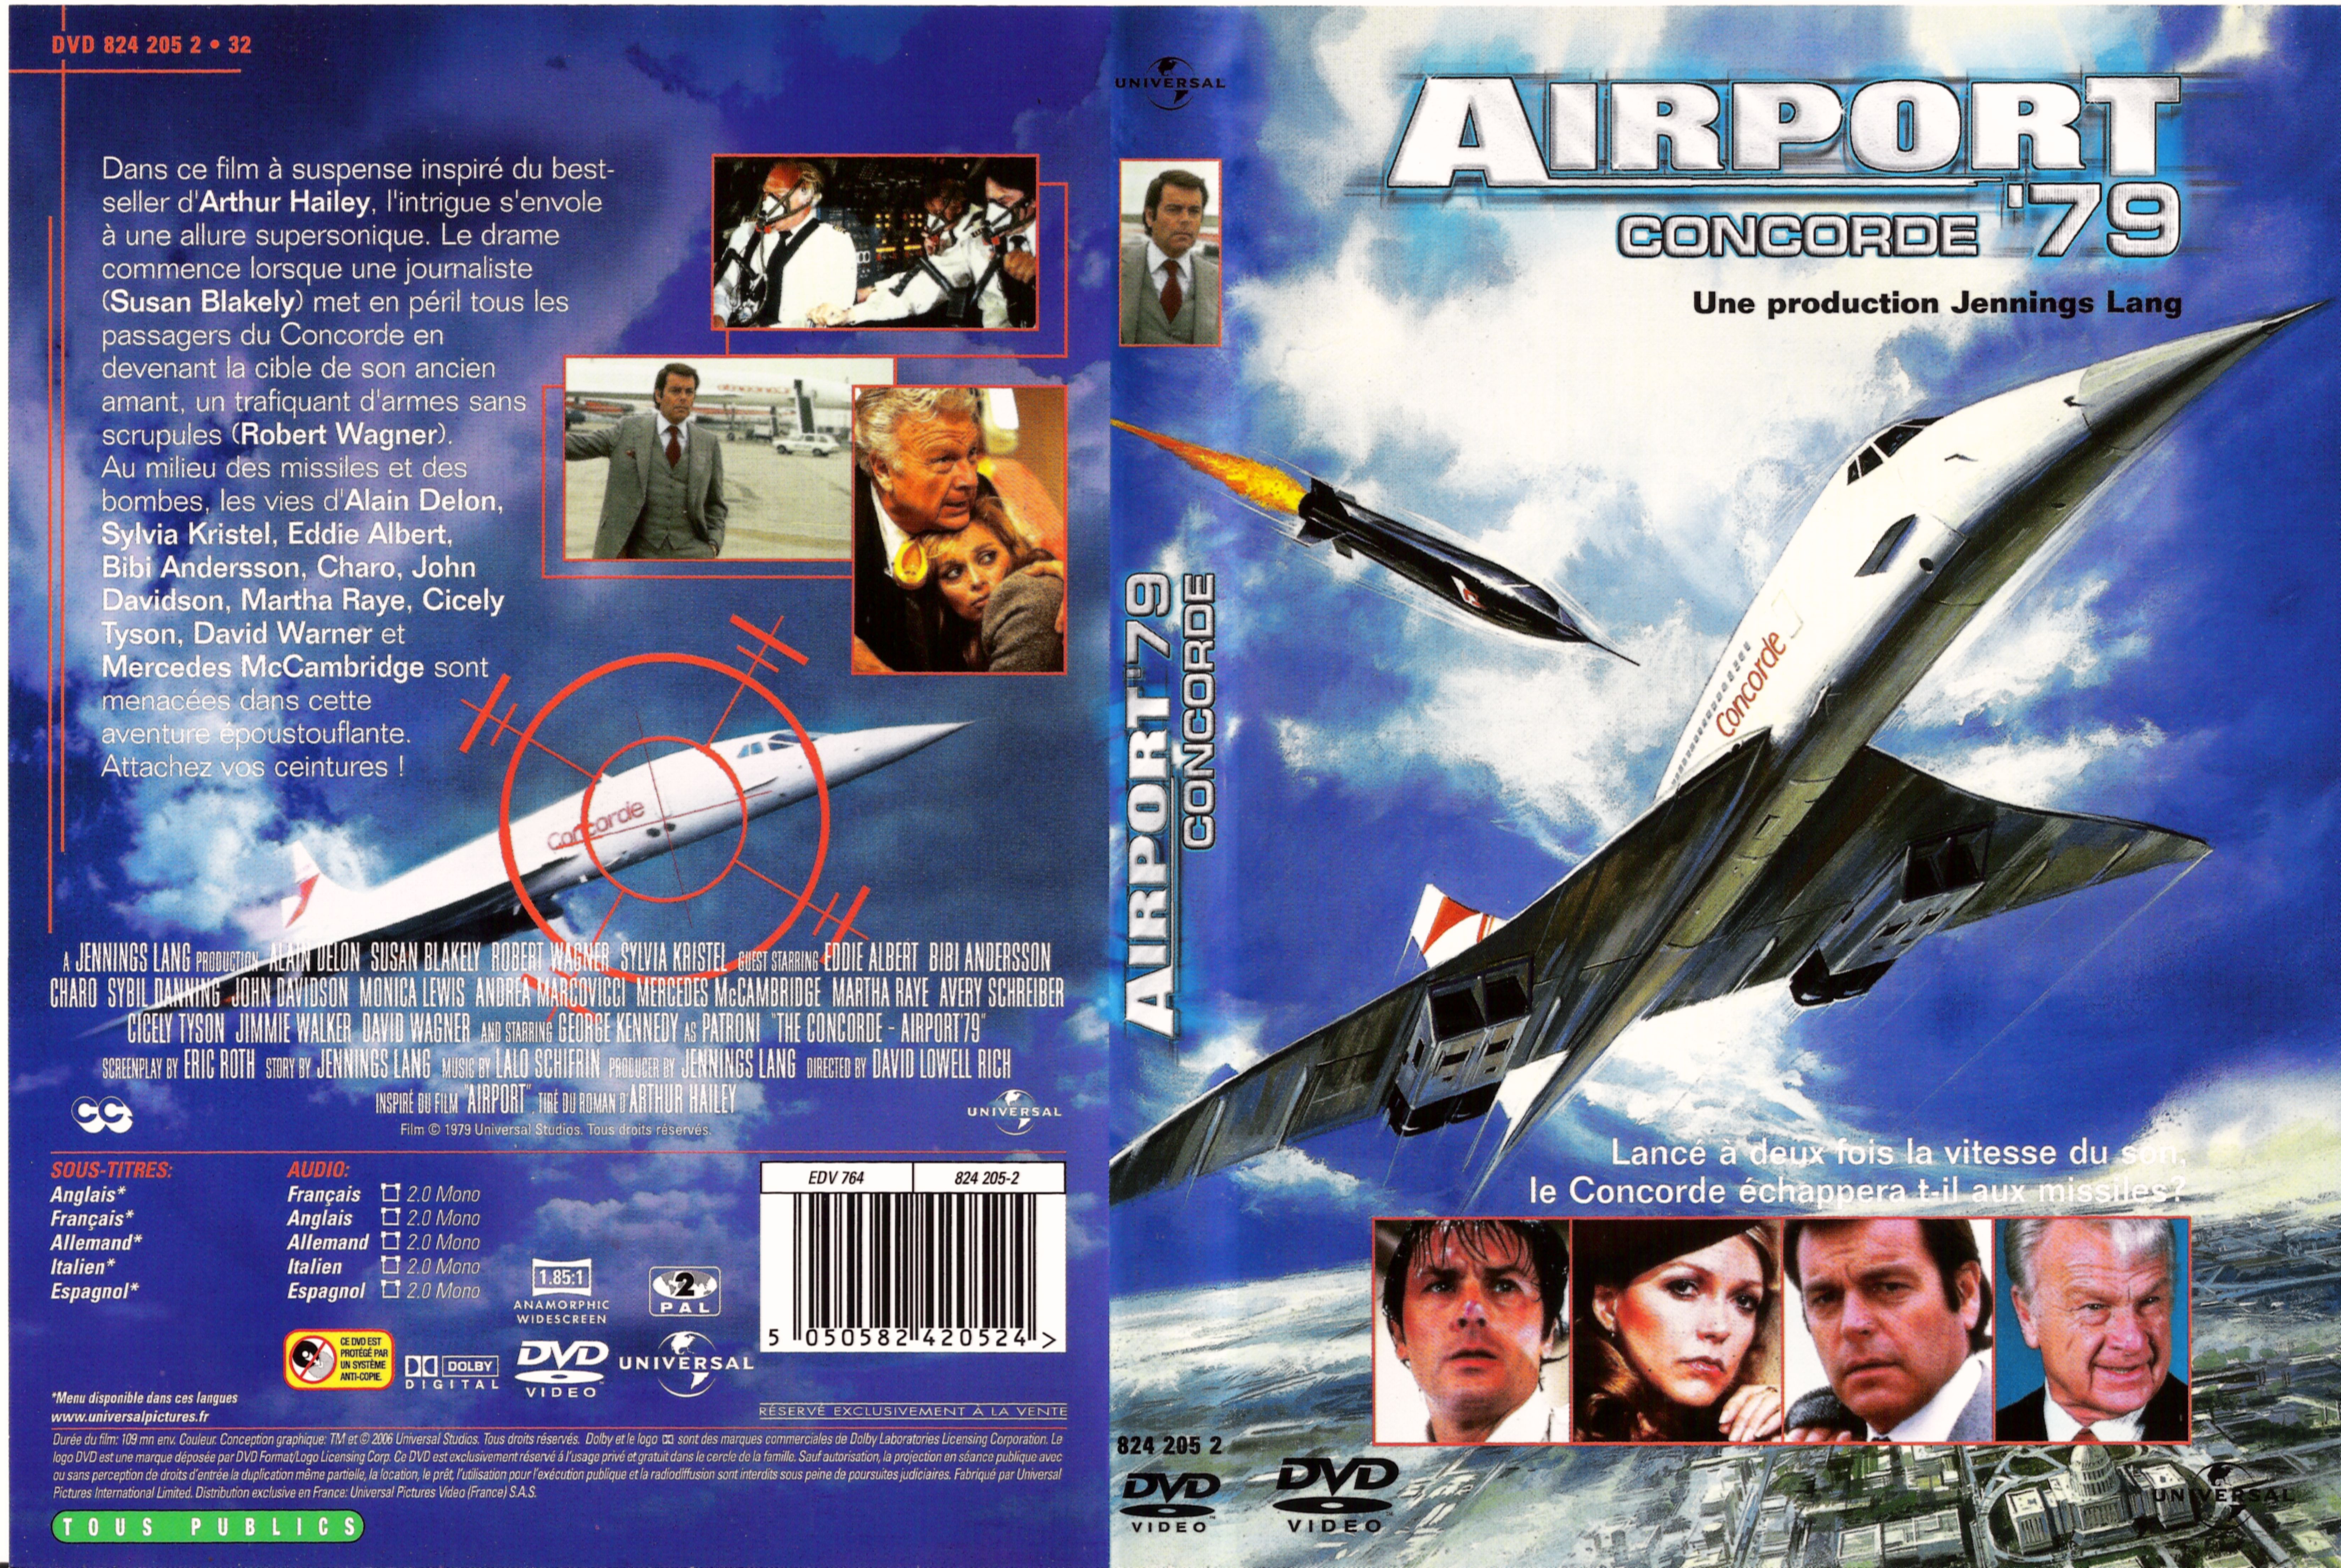 Jaquette DVD Airport Concorde 79